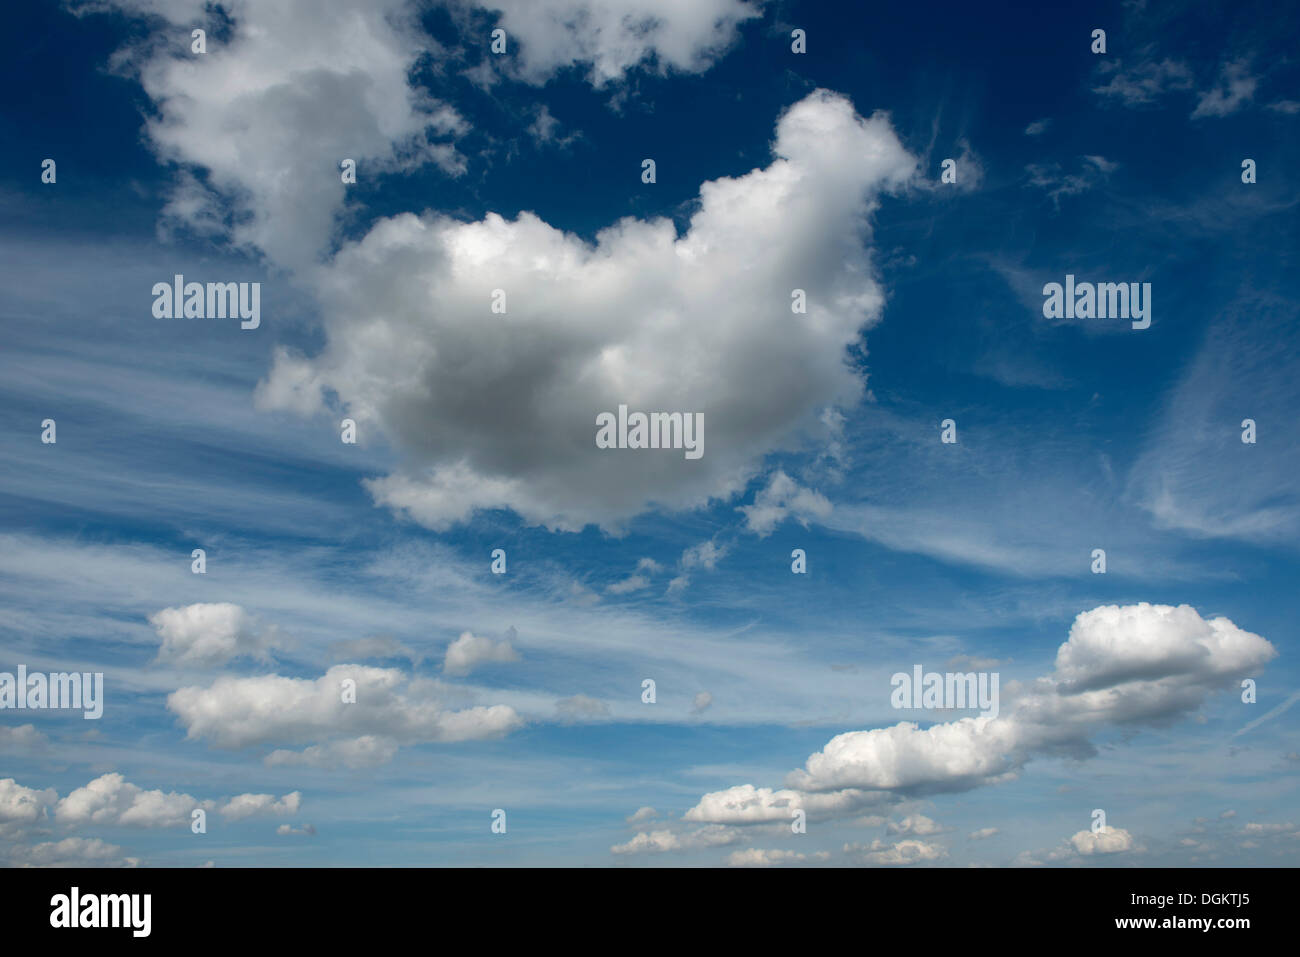 Cumulus clouds and cirrus clouds in the sky Stock Photo